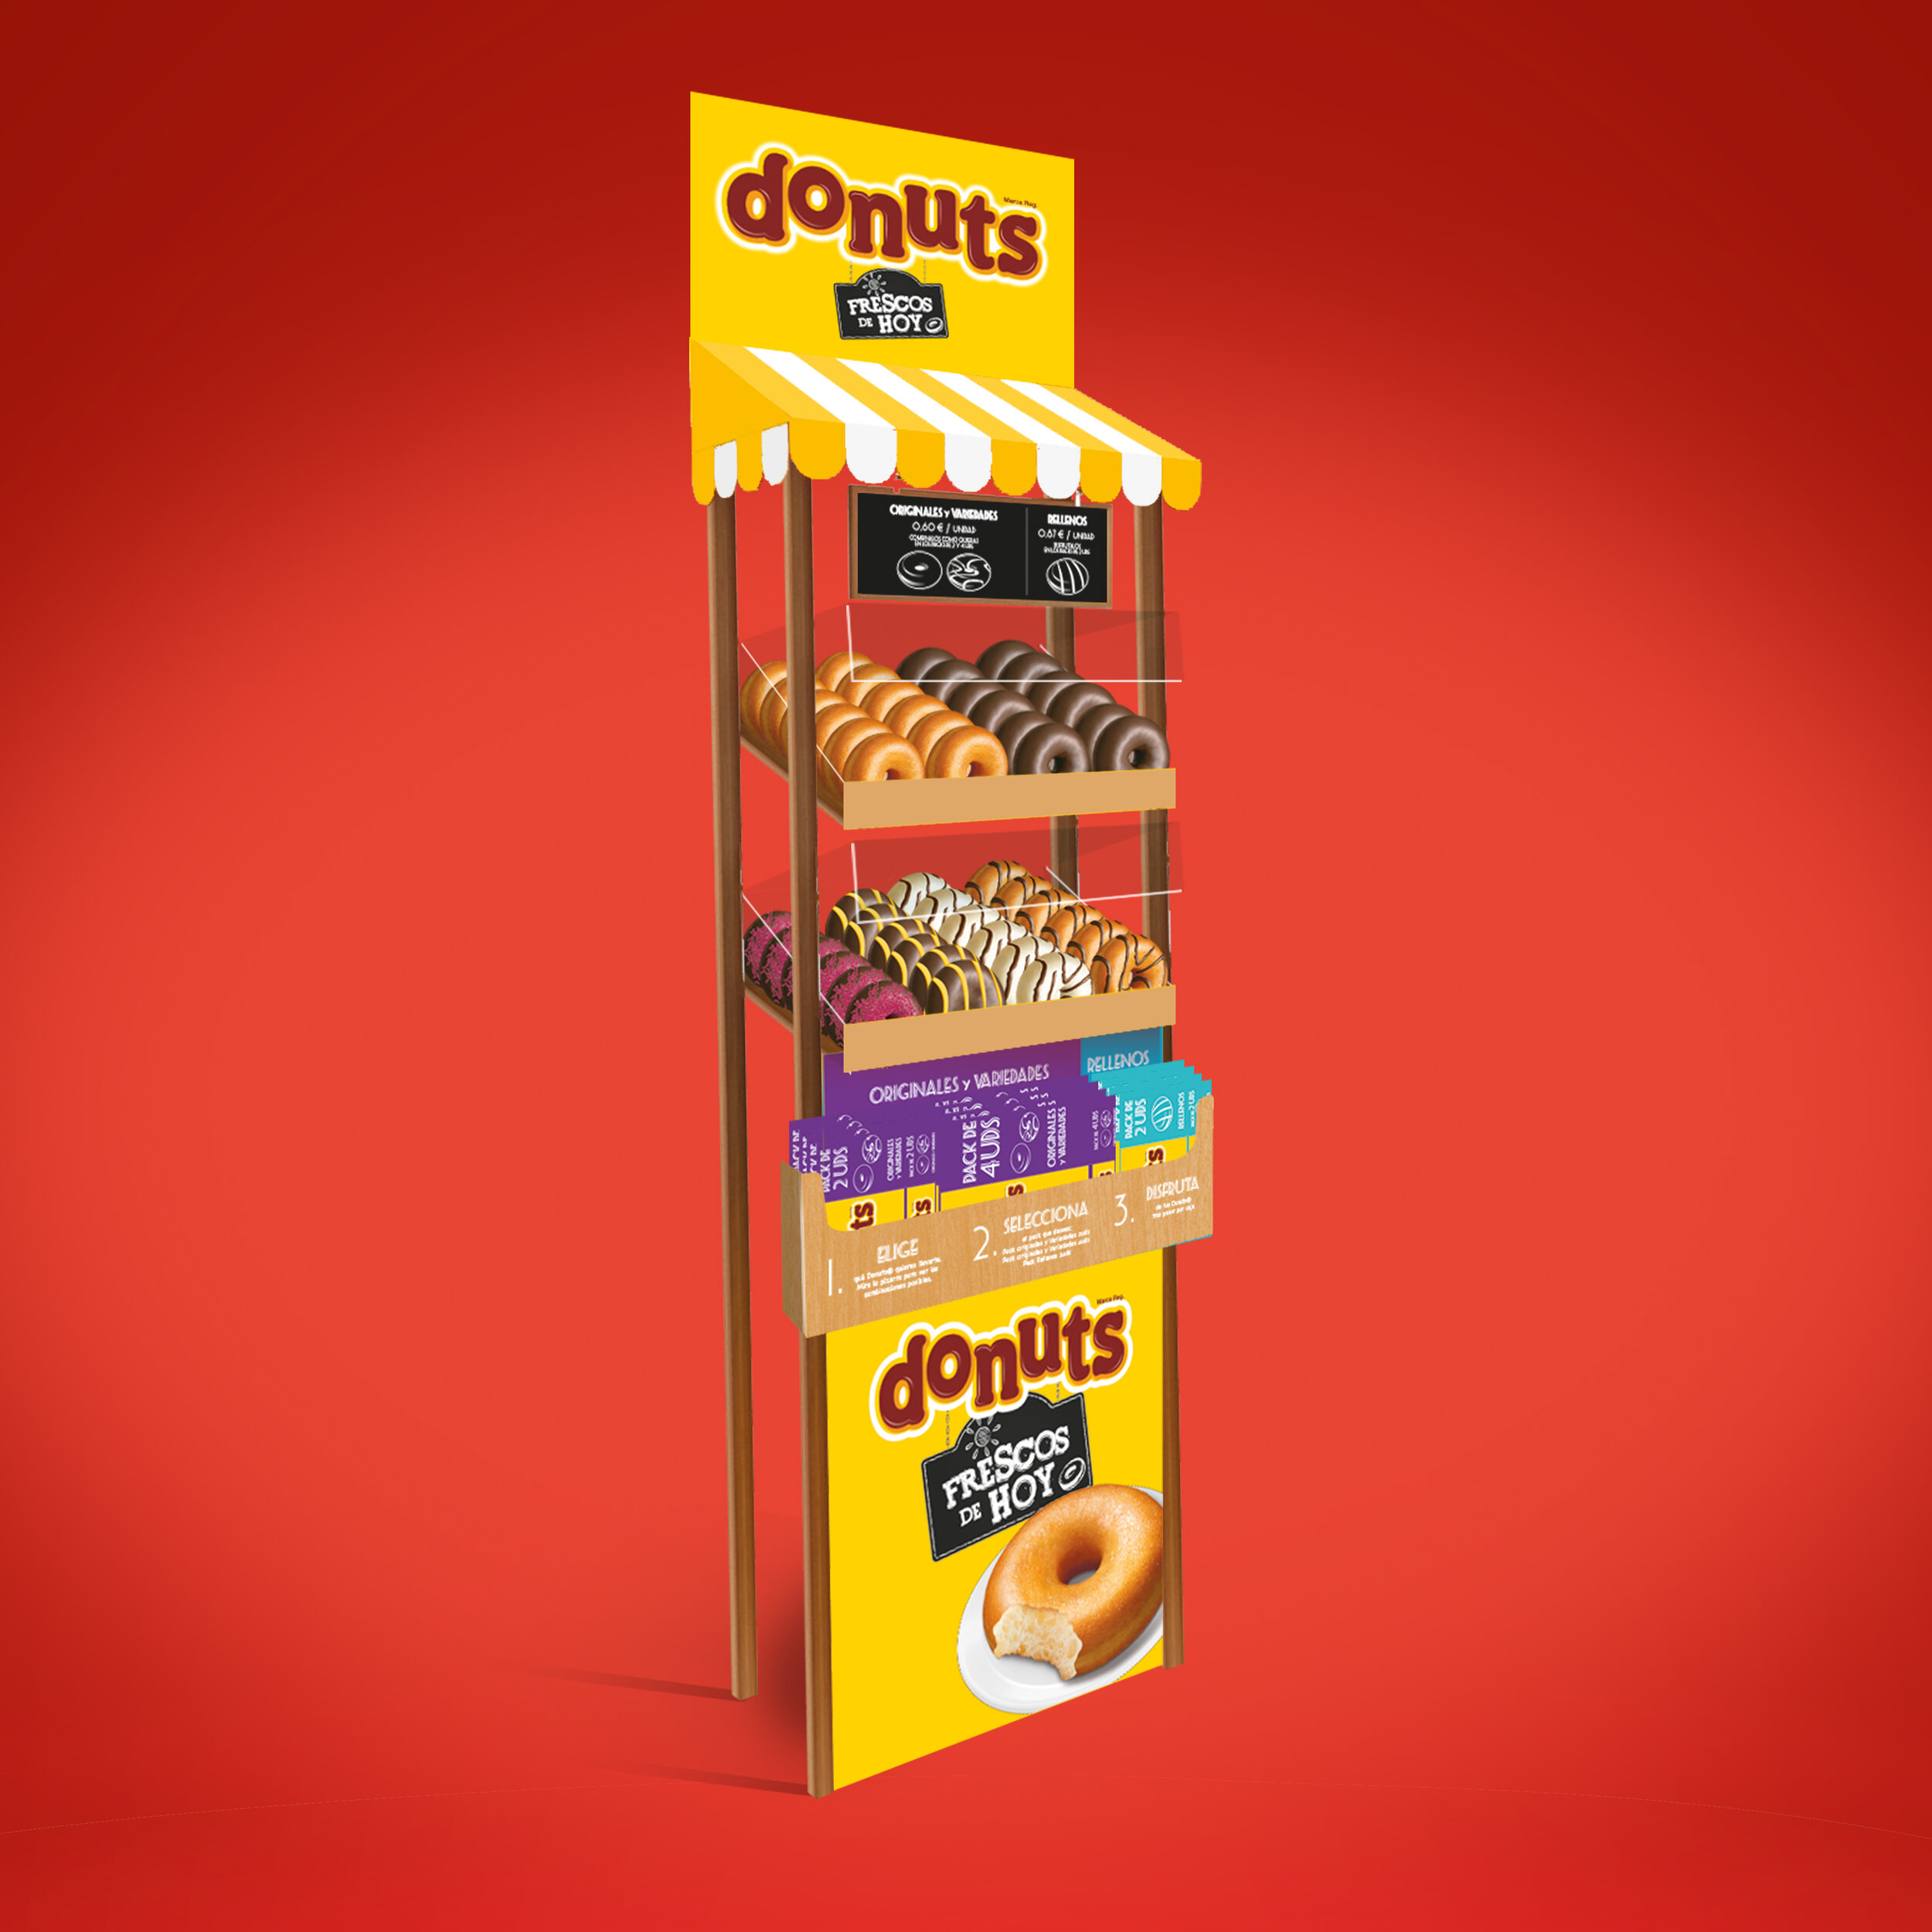 Donuts-Seleccion-del-dia_04.jpg